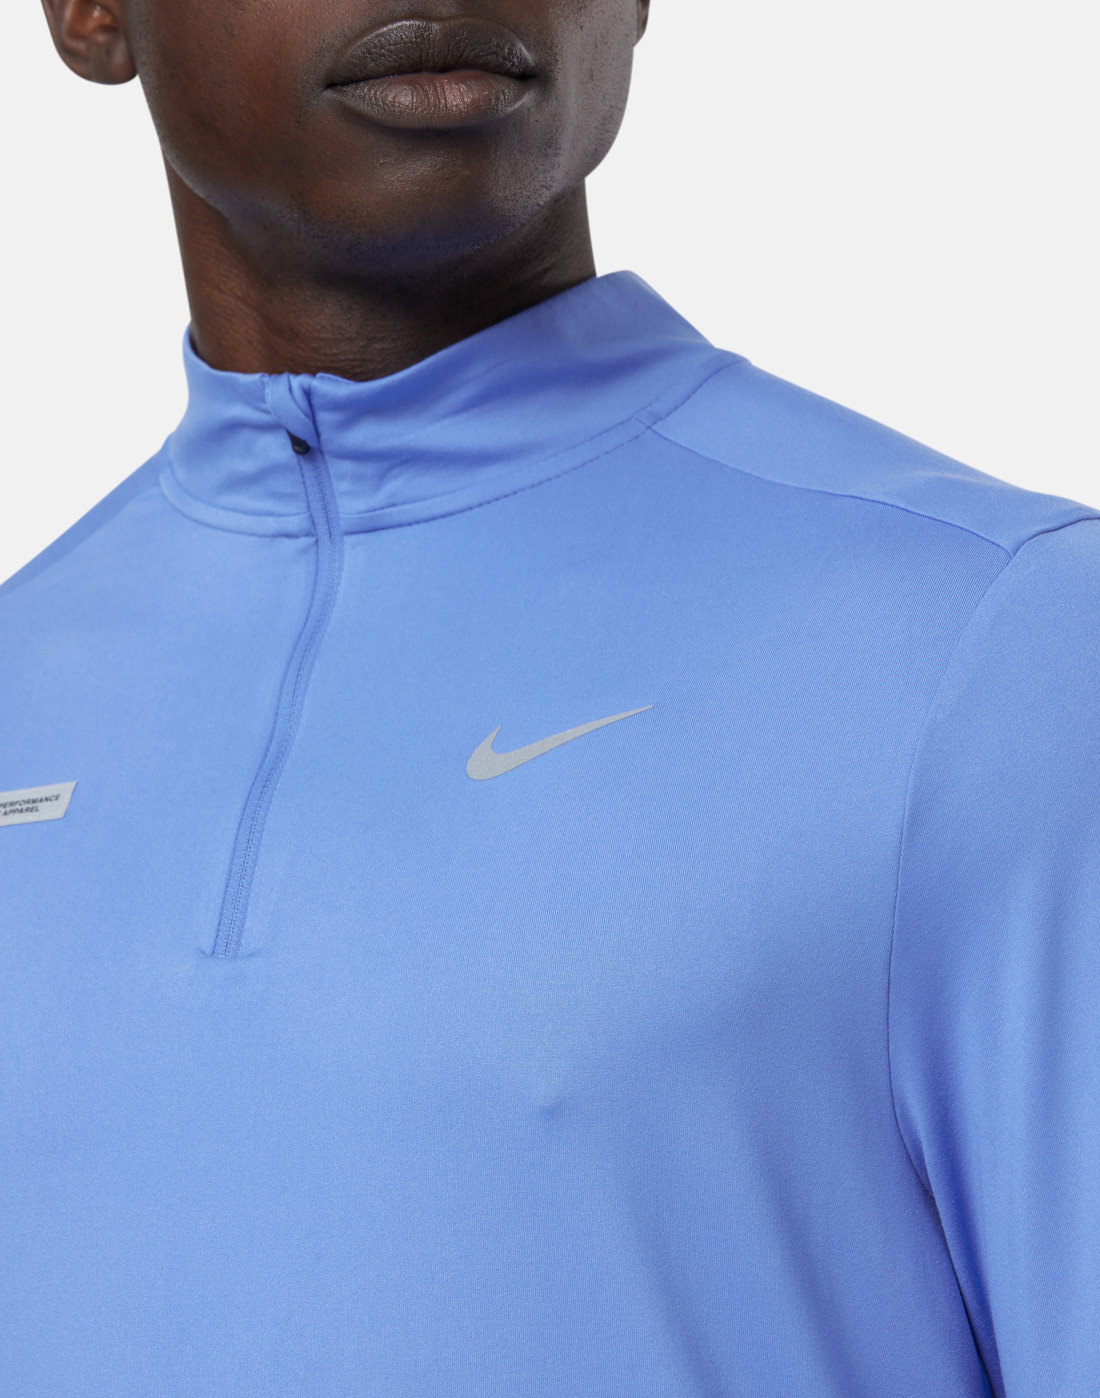 Nike Mens Element Flash Half Zip Top - Blue | Life Style Sports IE